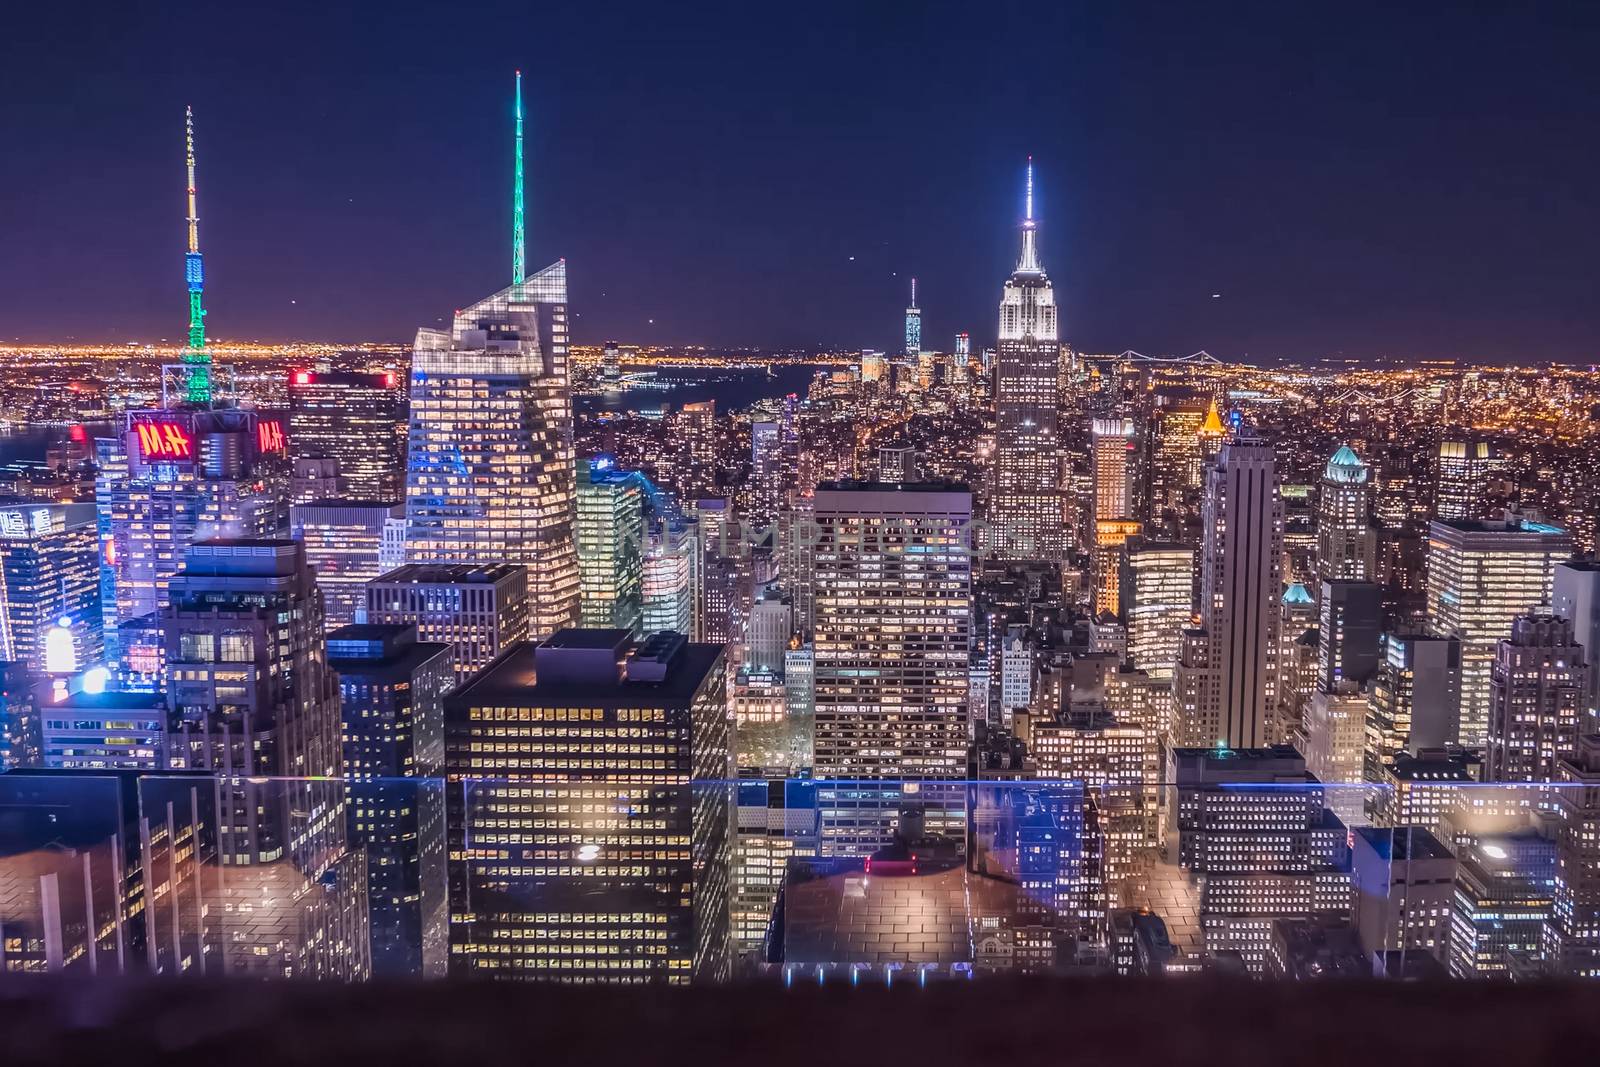 Night New York. City lights at night in New York by nyrok